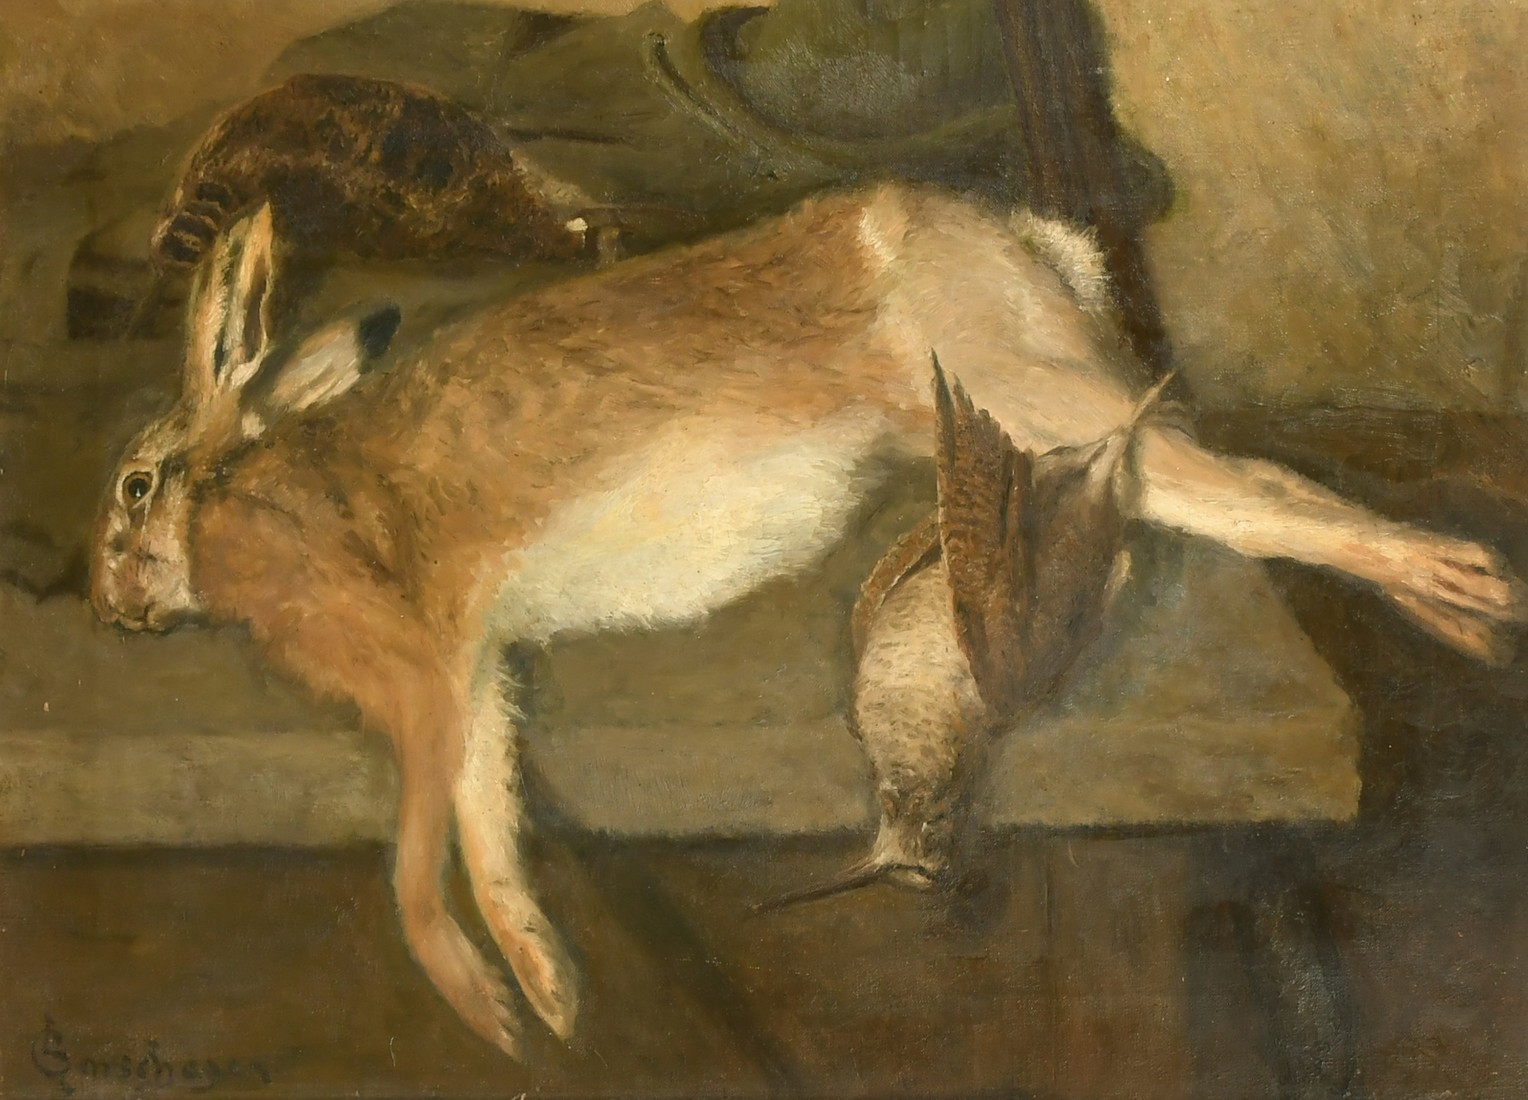 Garschagen (19th/20th Century), still life study of dead game, oil on canvas, signed, 20" x 30", (51